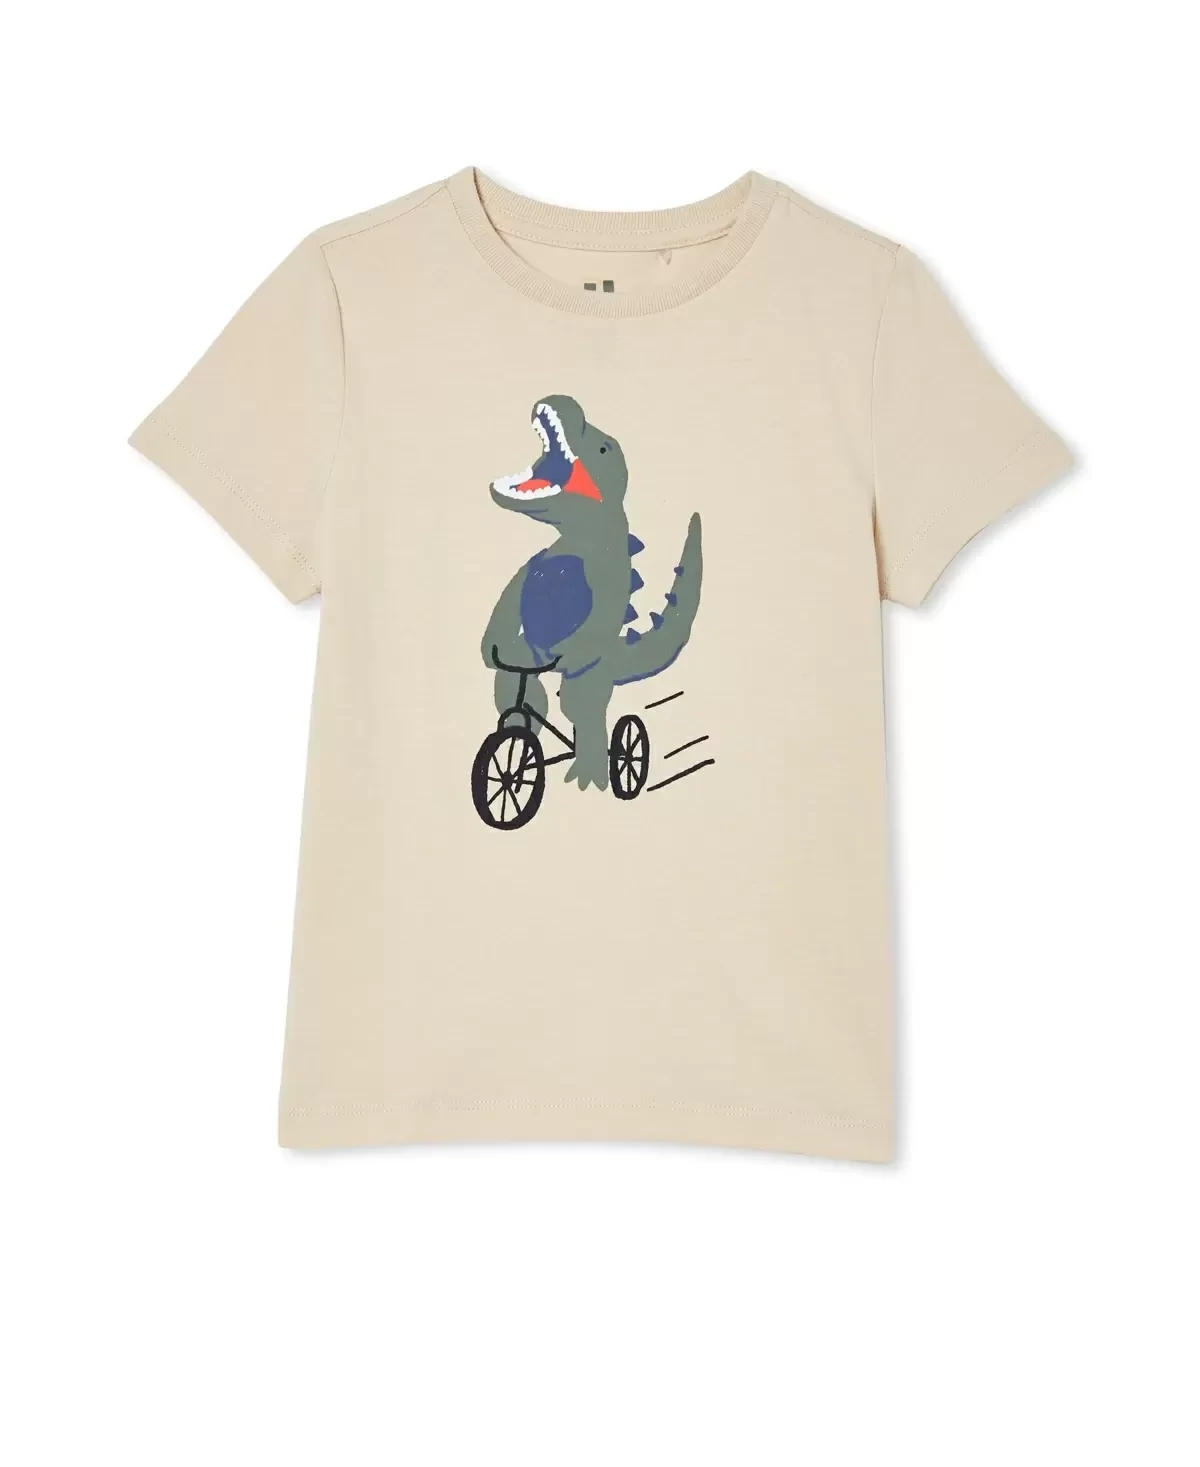 Cotton On Little Boys Max Short Sleeve T-shirt, Rainy Day Bike Dino - Size 7